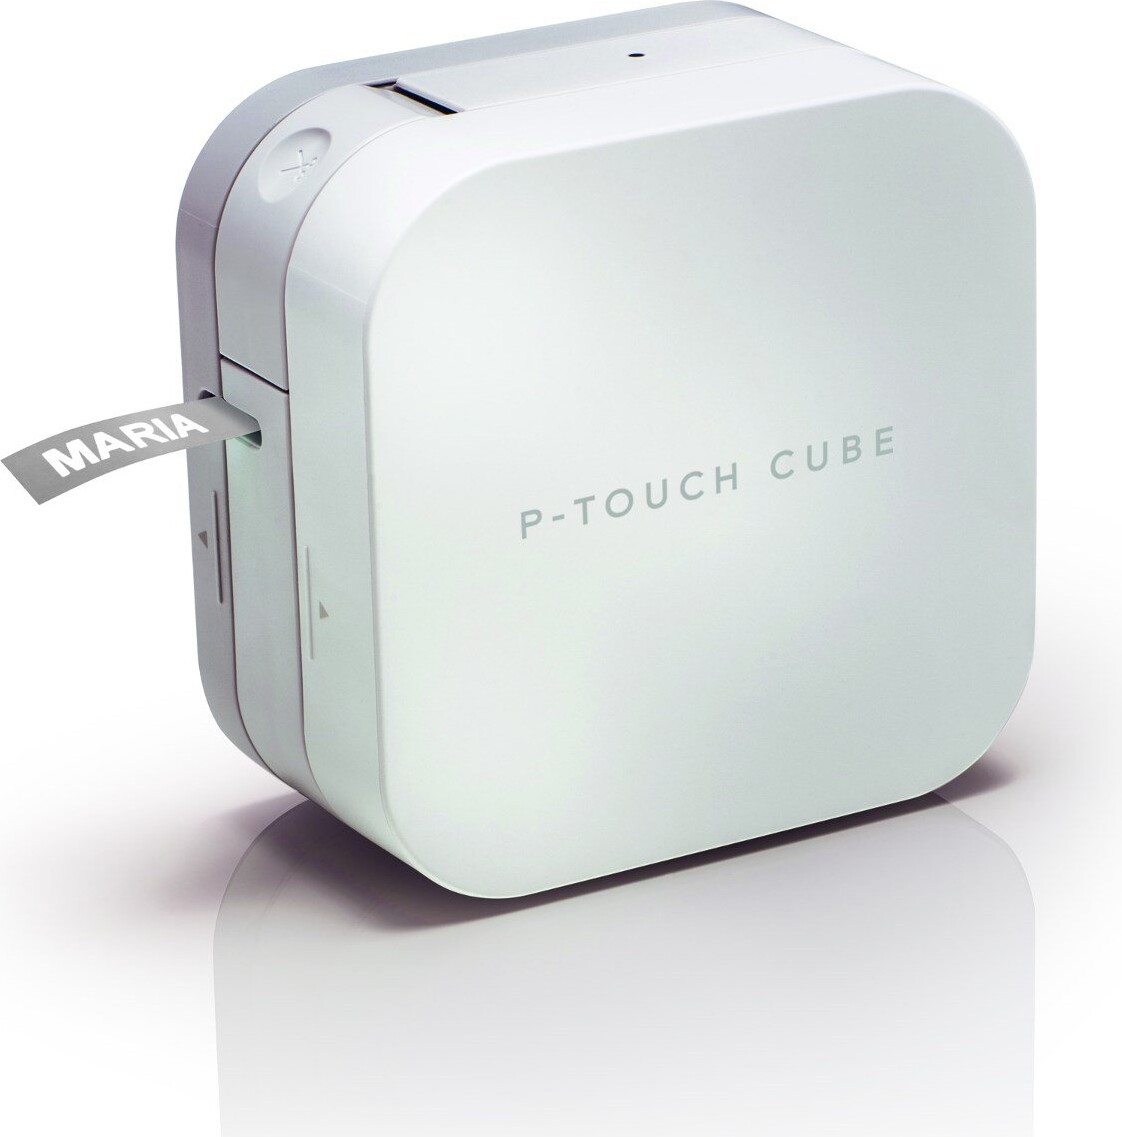 Billede af Brother - P-touch Cube Bluetooth Labelling Machine hos Gucca.dk